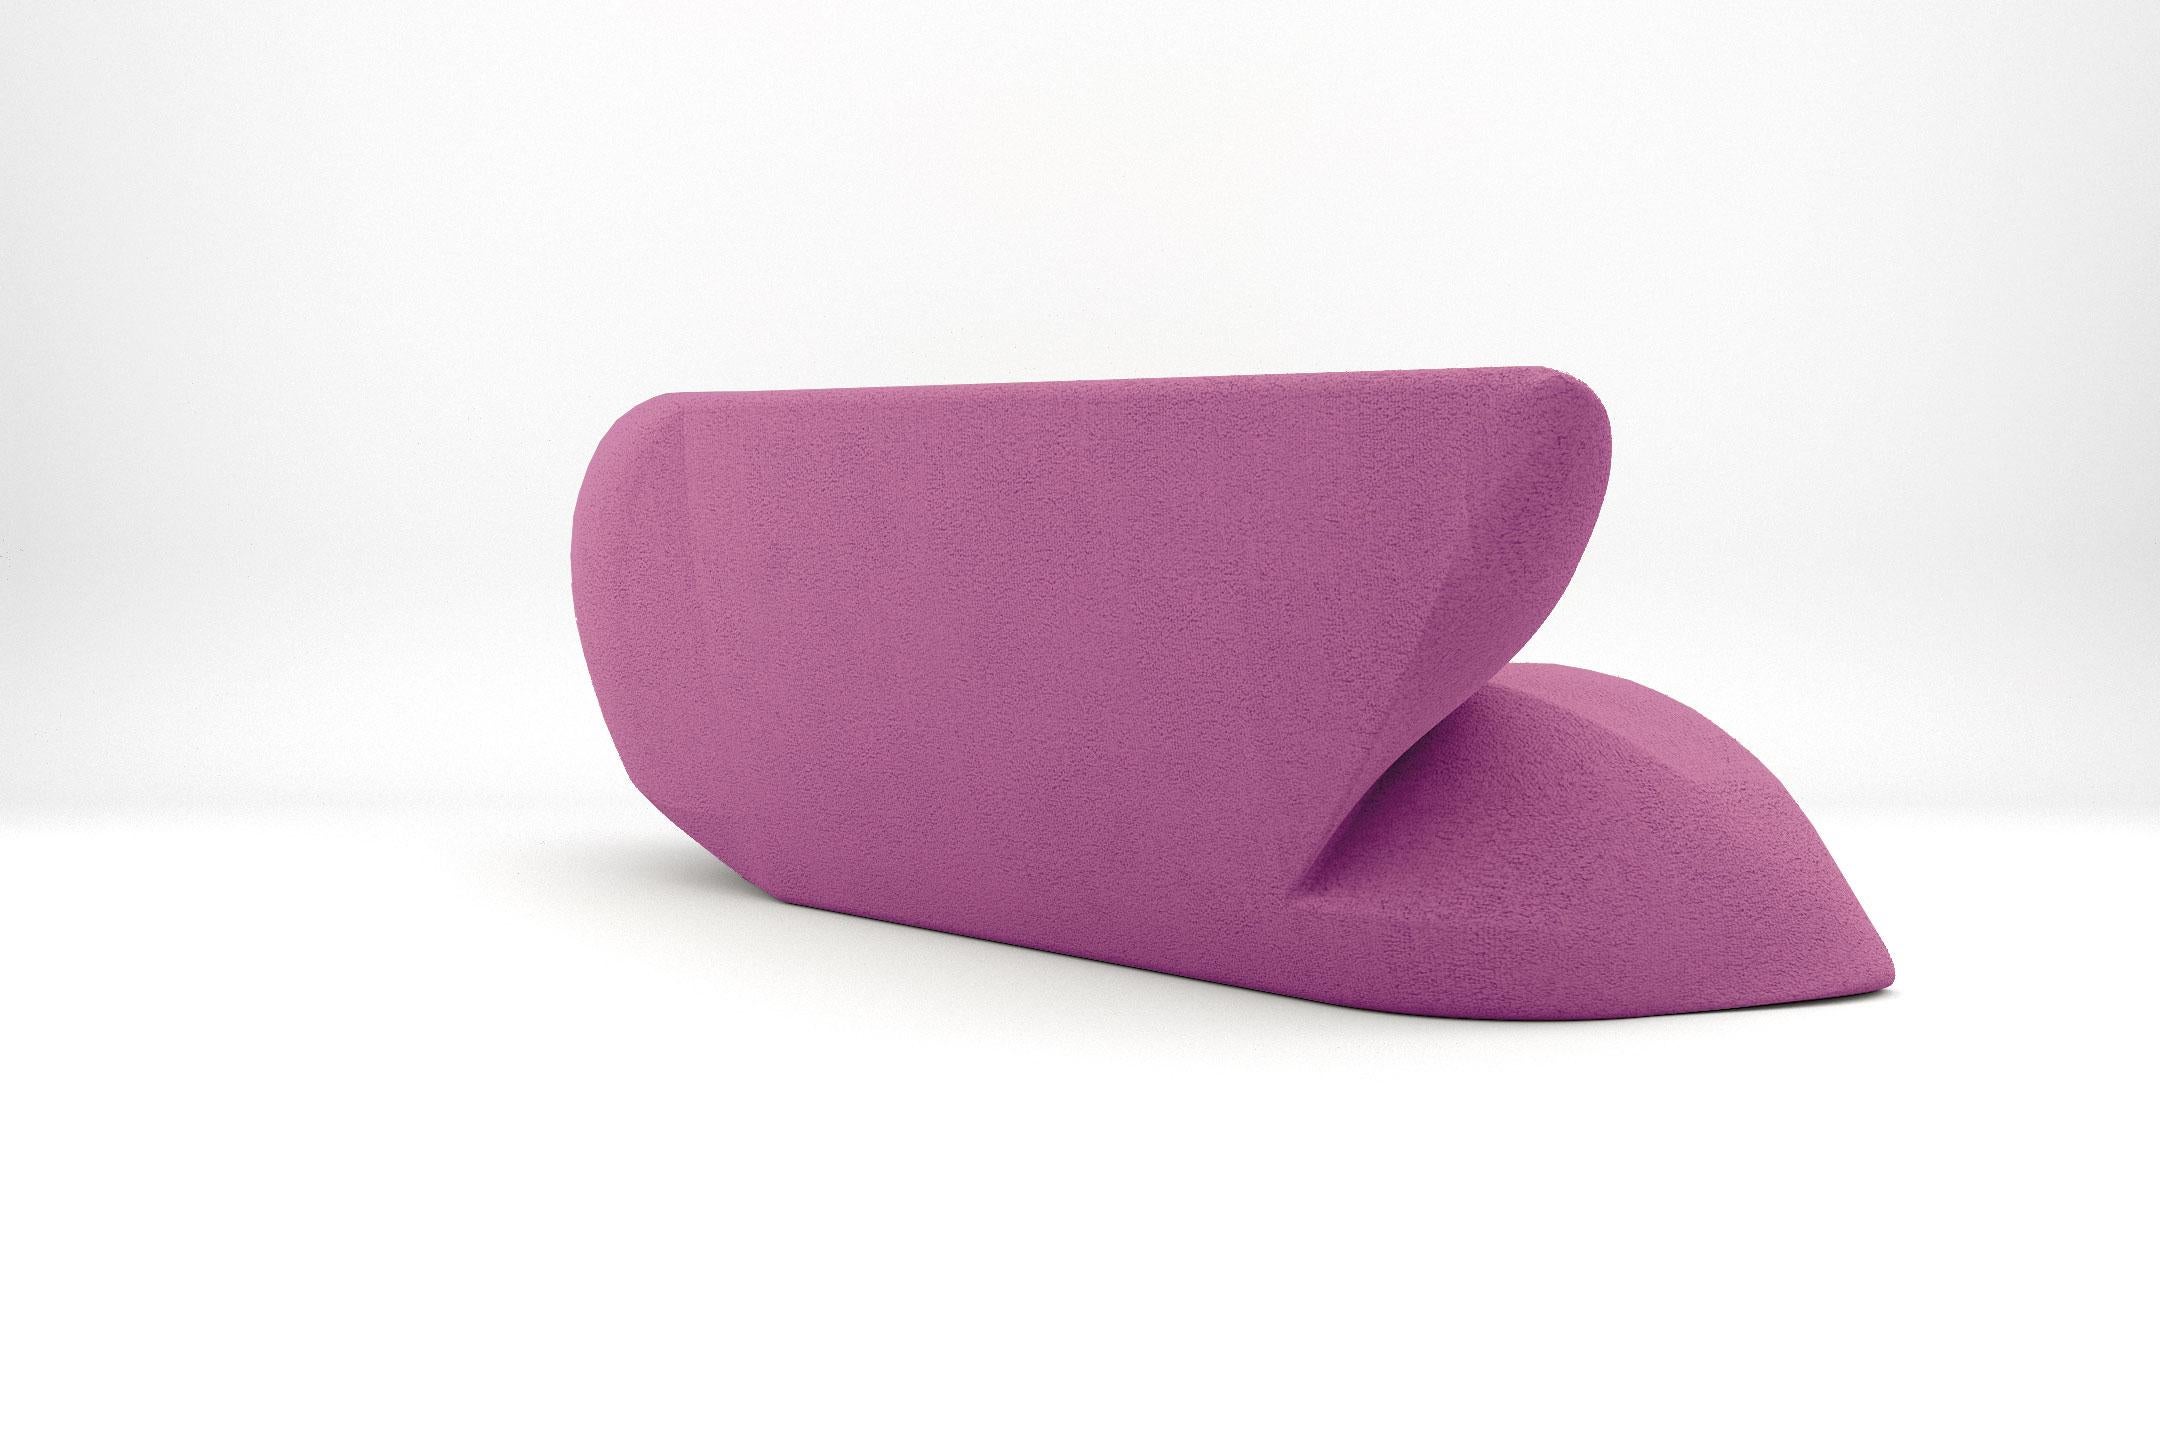 European Delta Sofa - Modern Violet Upholstered Three Seat Sofa For Sale